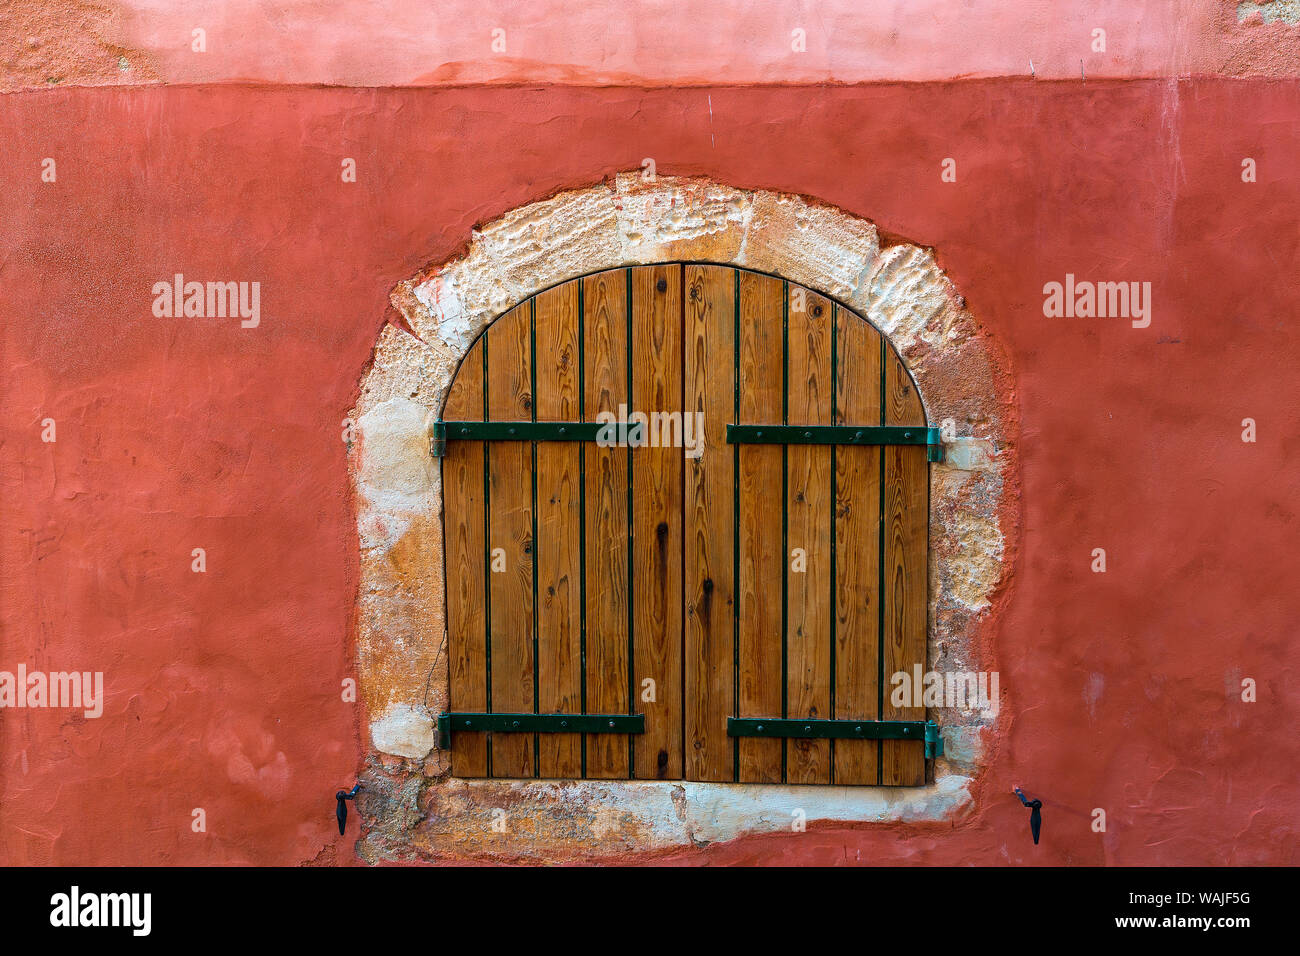 Europa, Frankreich, Provence, Roussillon. Fensterläden aus Holz in rot Wand. Kredit als: Jim Nilsen/Jaynes Galerie/DanitaDelimont.com Stockfoto